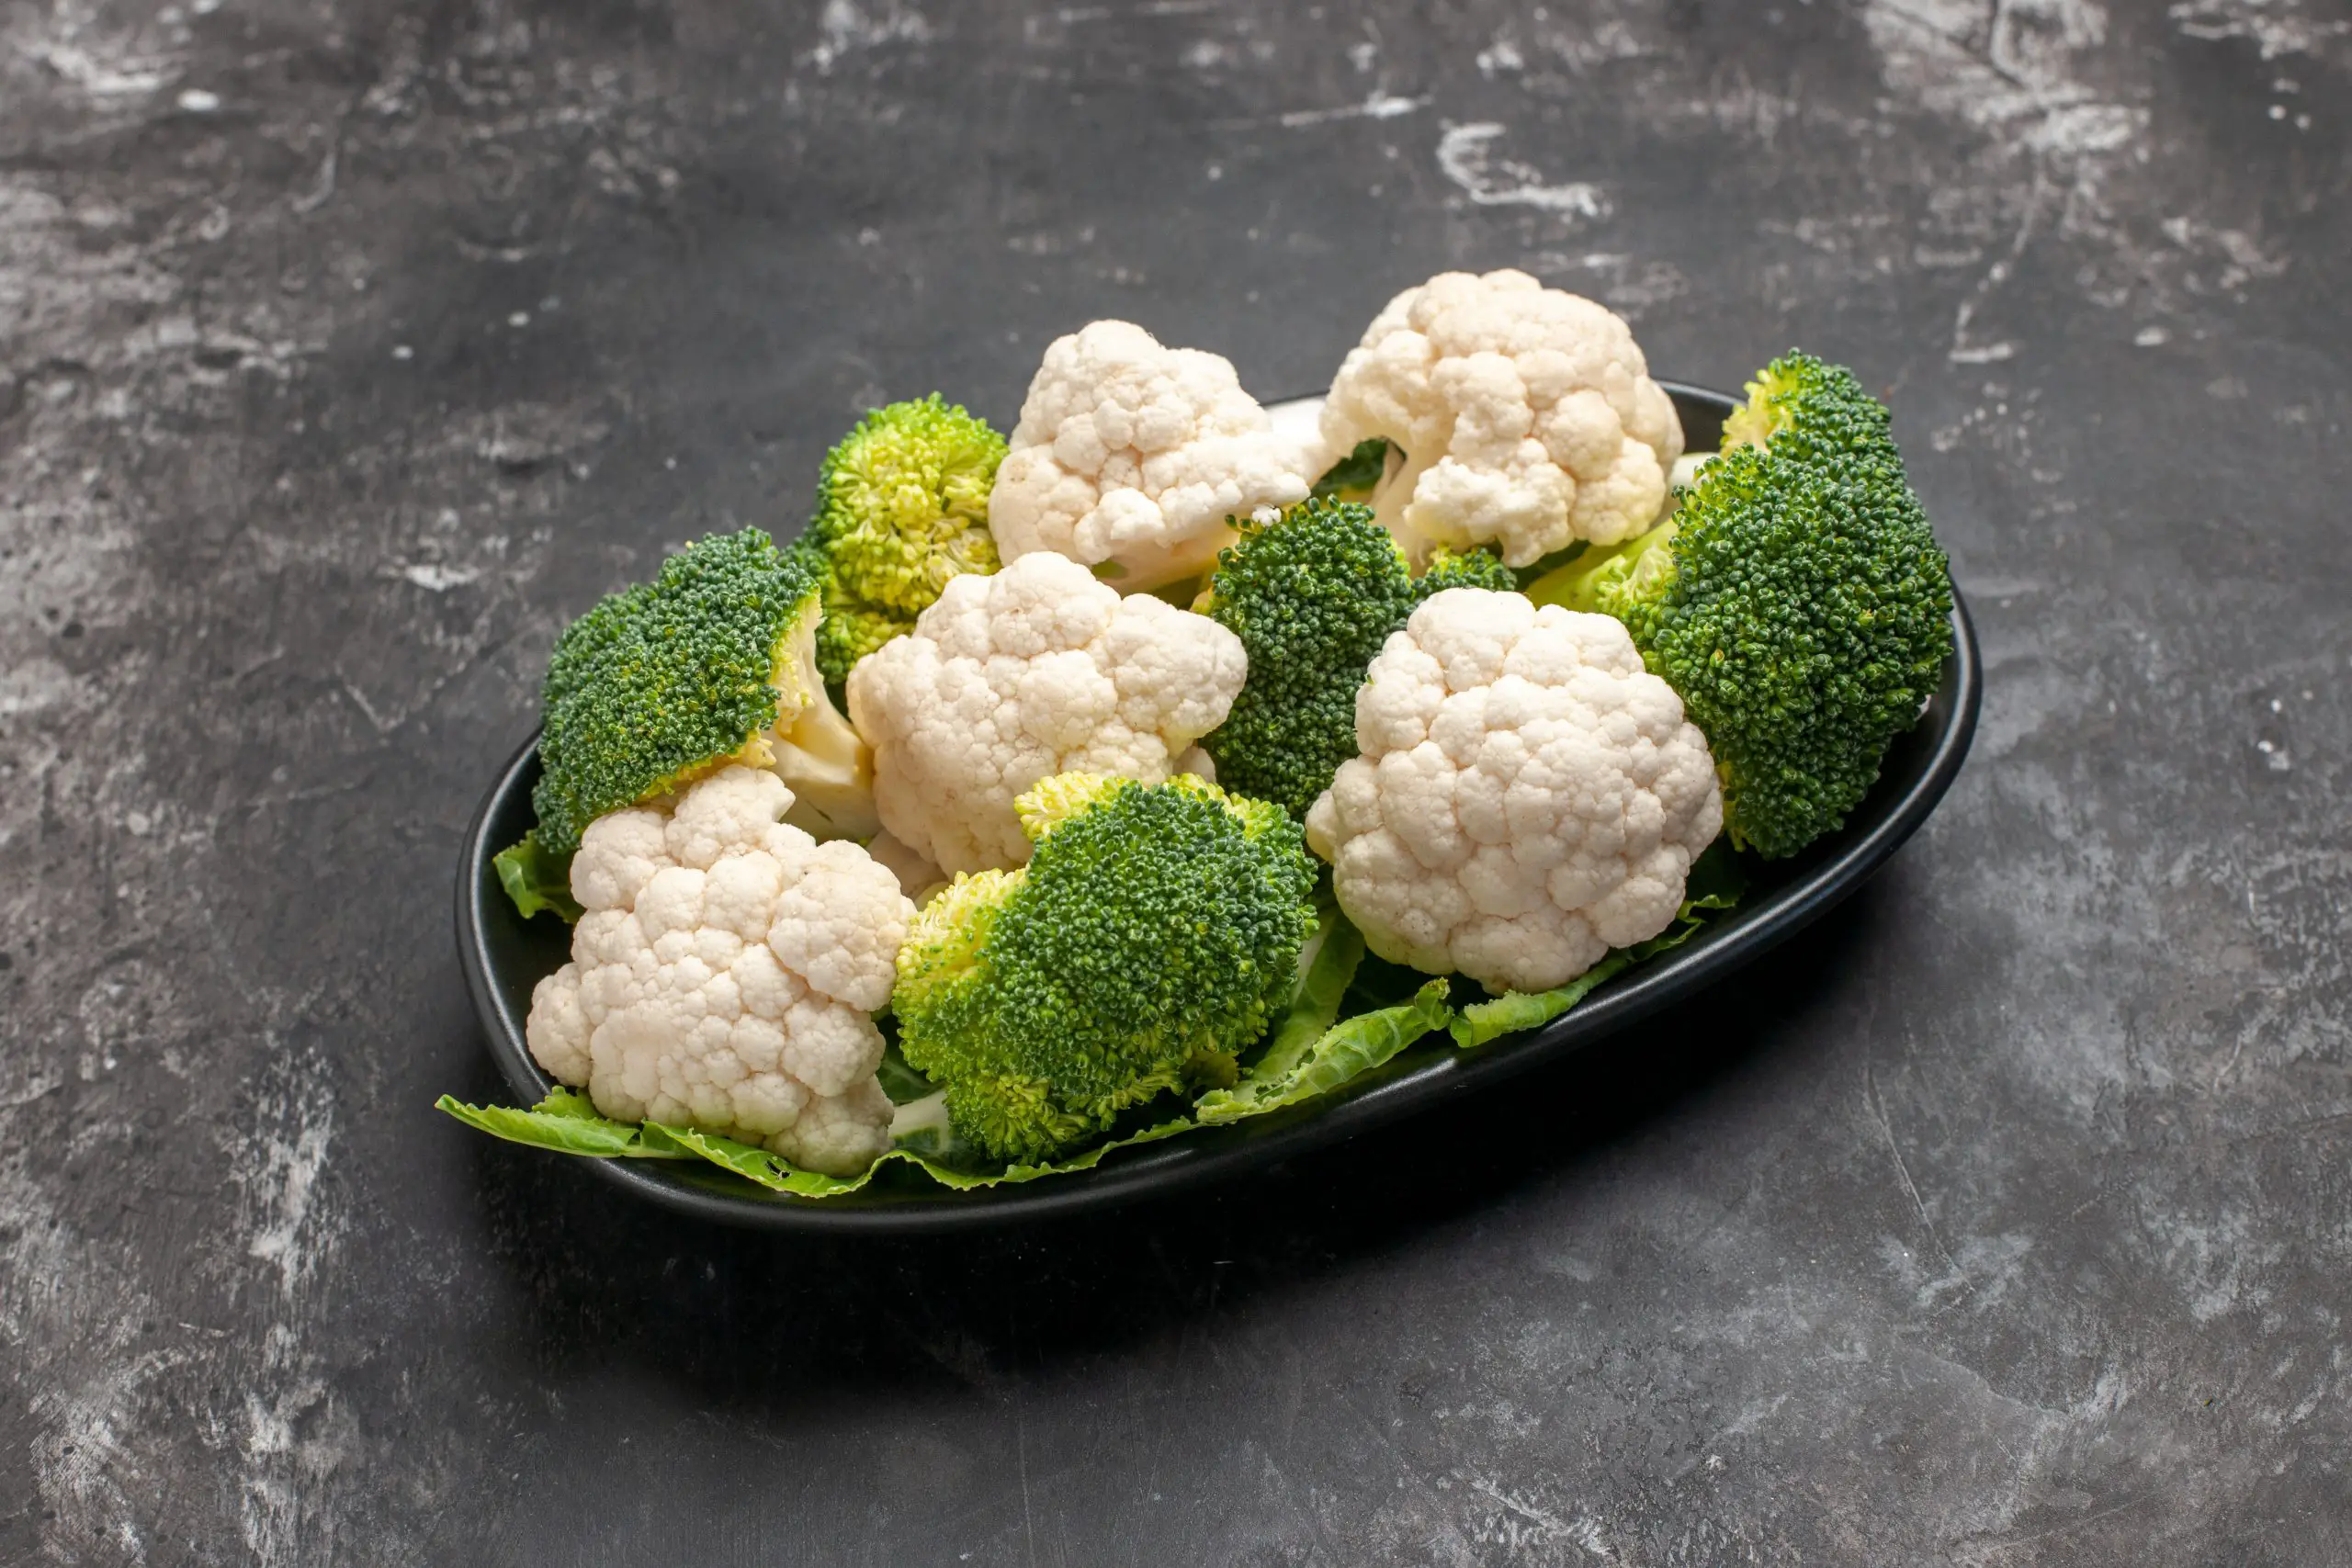 How to Freeze Broccoli and Cauliflower